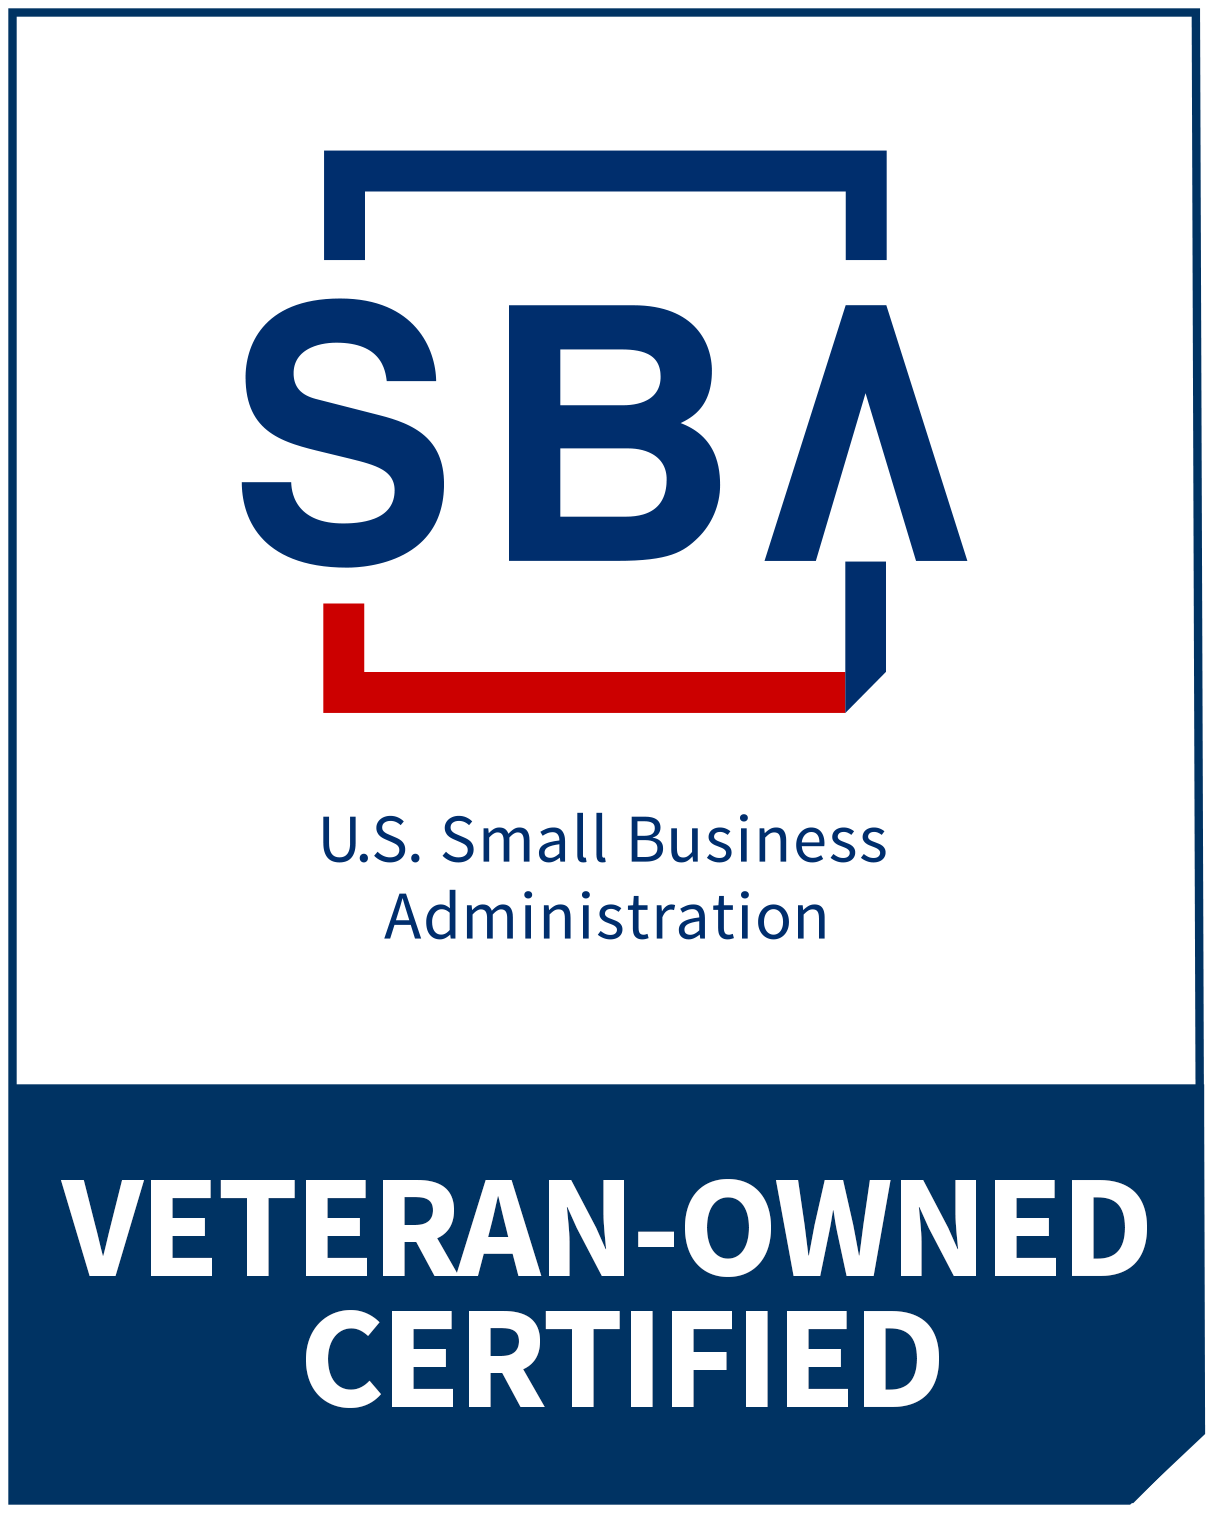 B & T Group LLC - VERIFIED AMERICAN SMALL BUSINESS